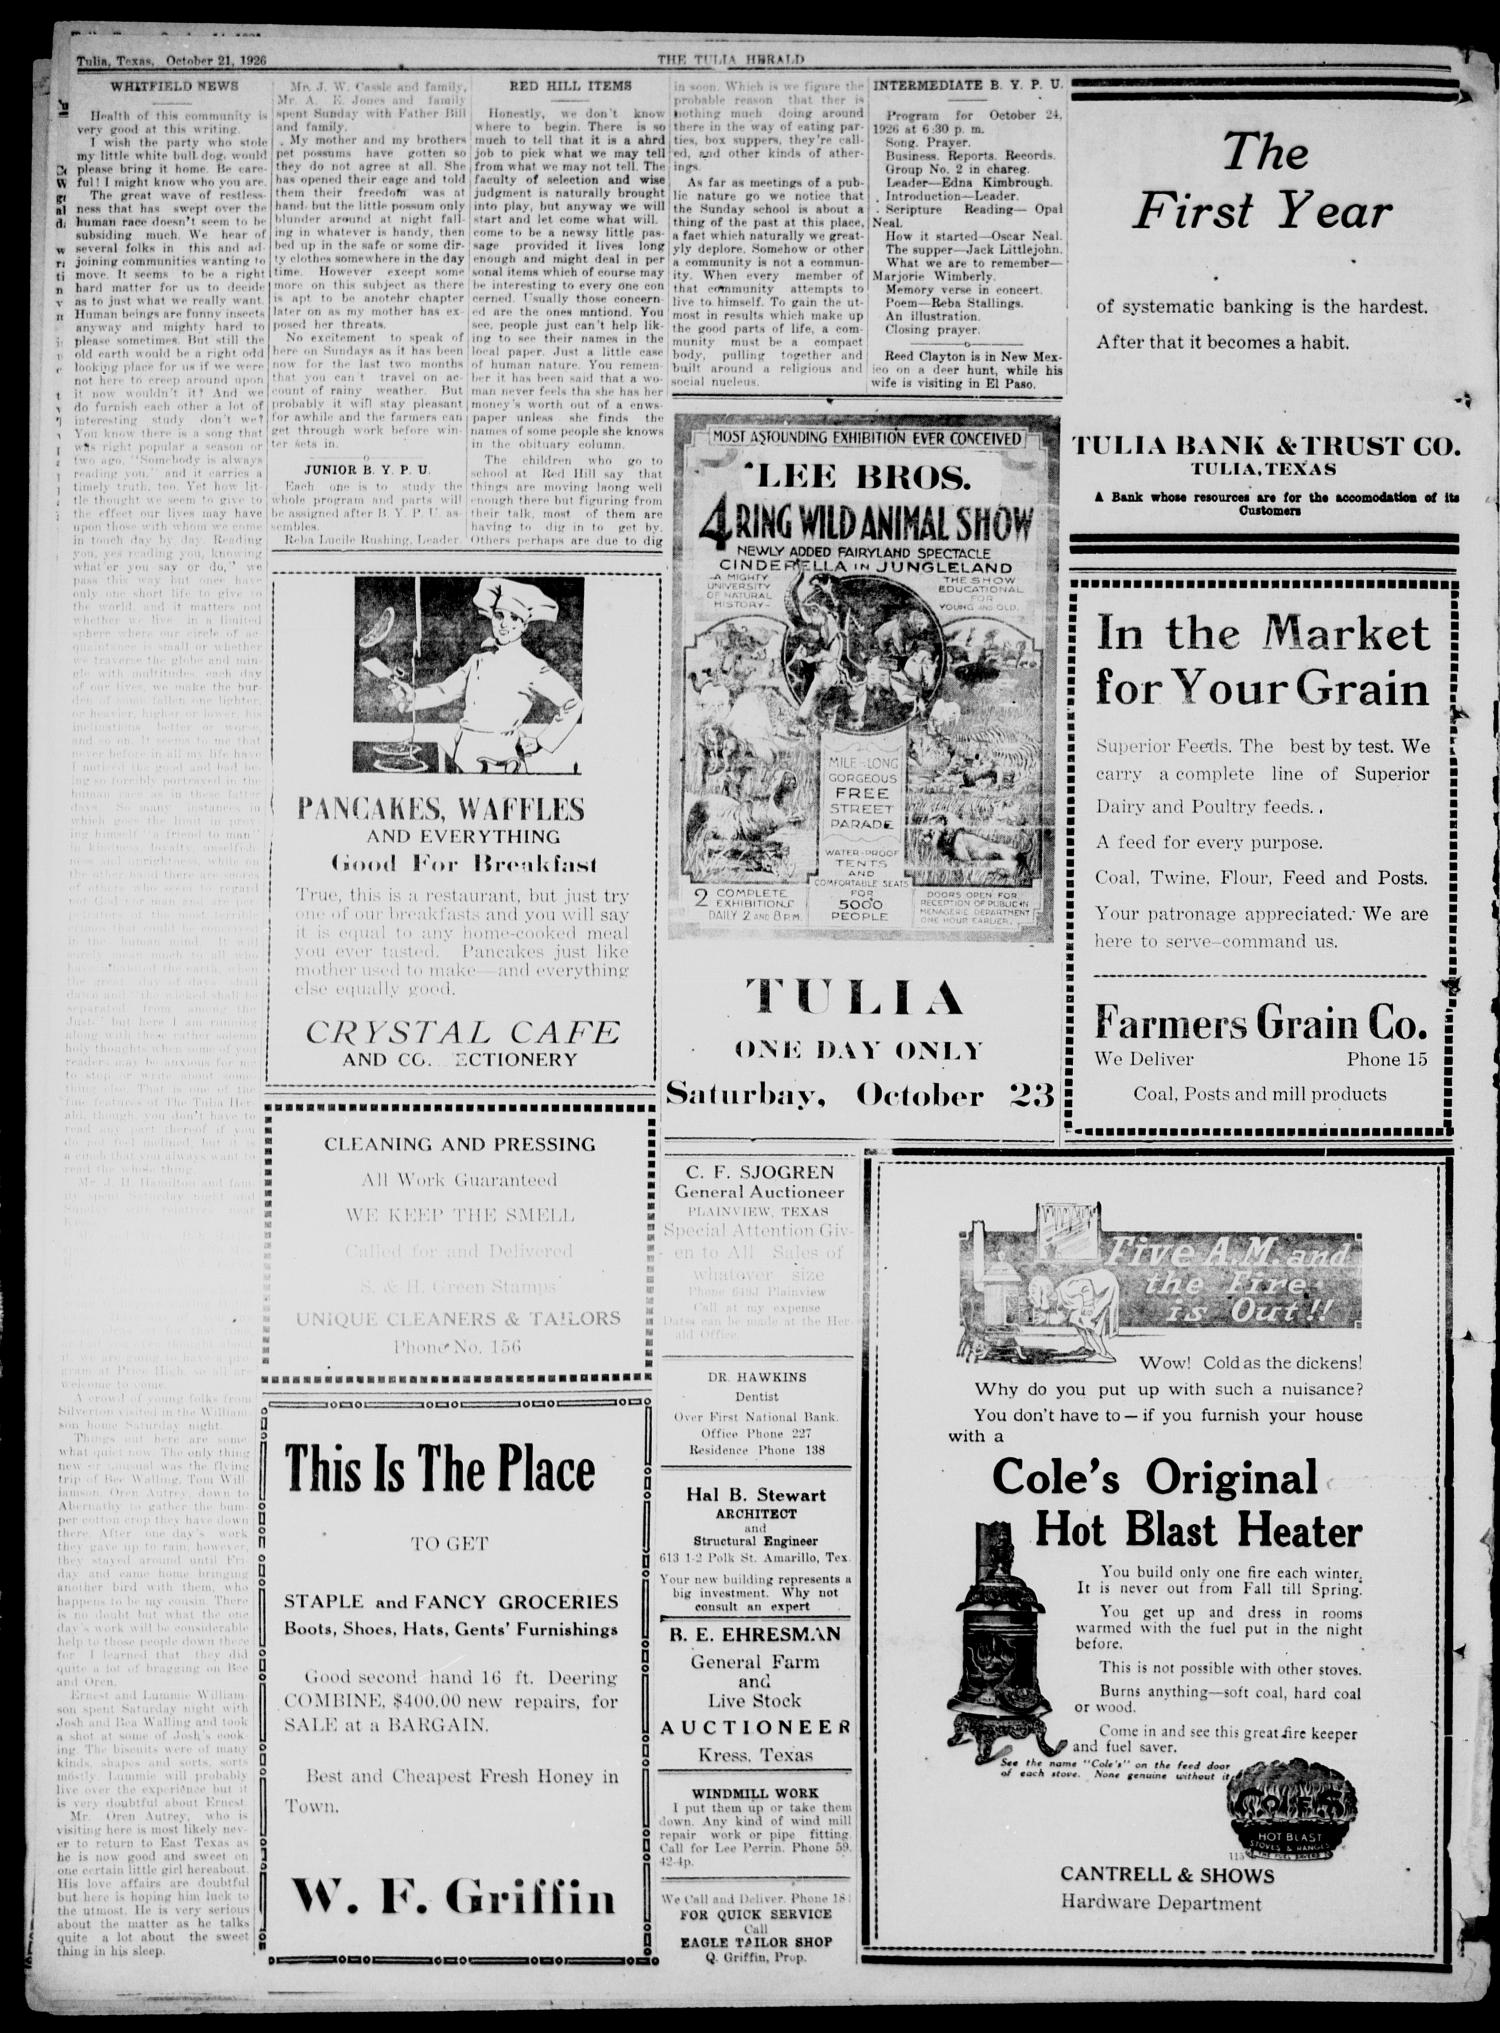 The Tulia Herald (Tulia, Tex), Vol. 17, No. 43, Ed. 1, Thursday, October 21, 1926
                                                
                                                    10
                                                